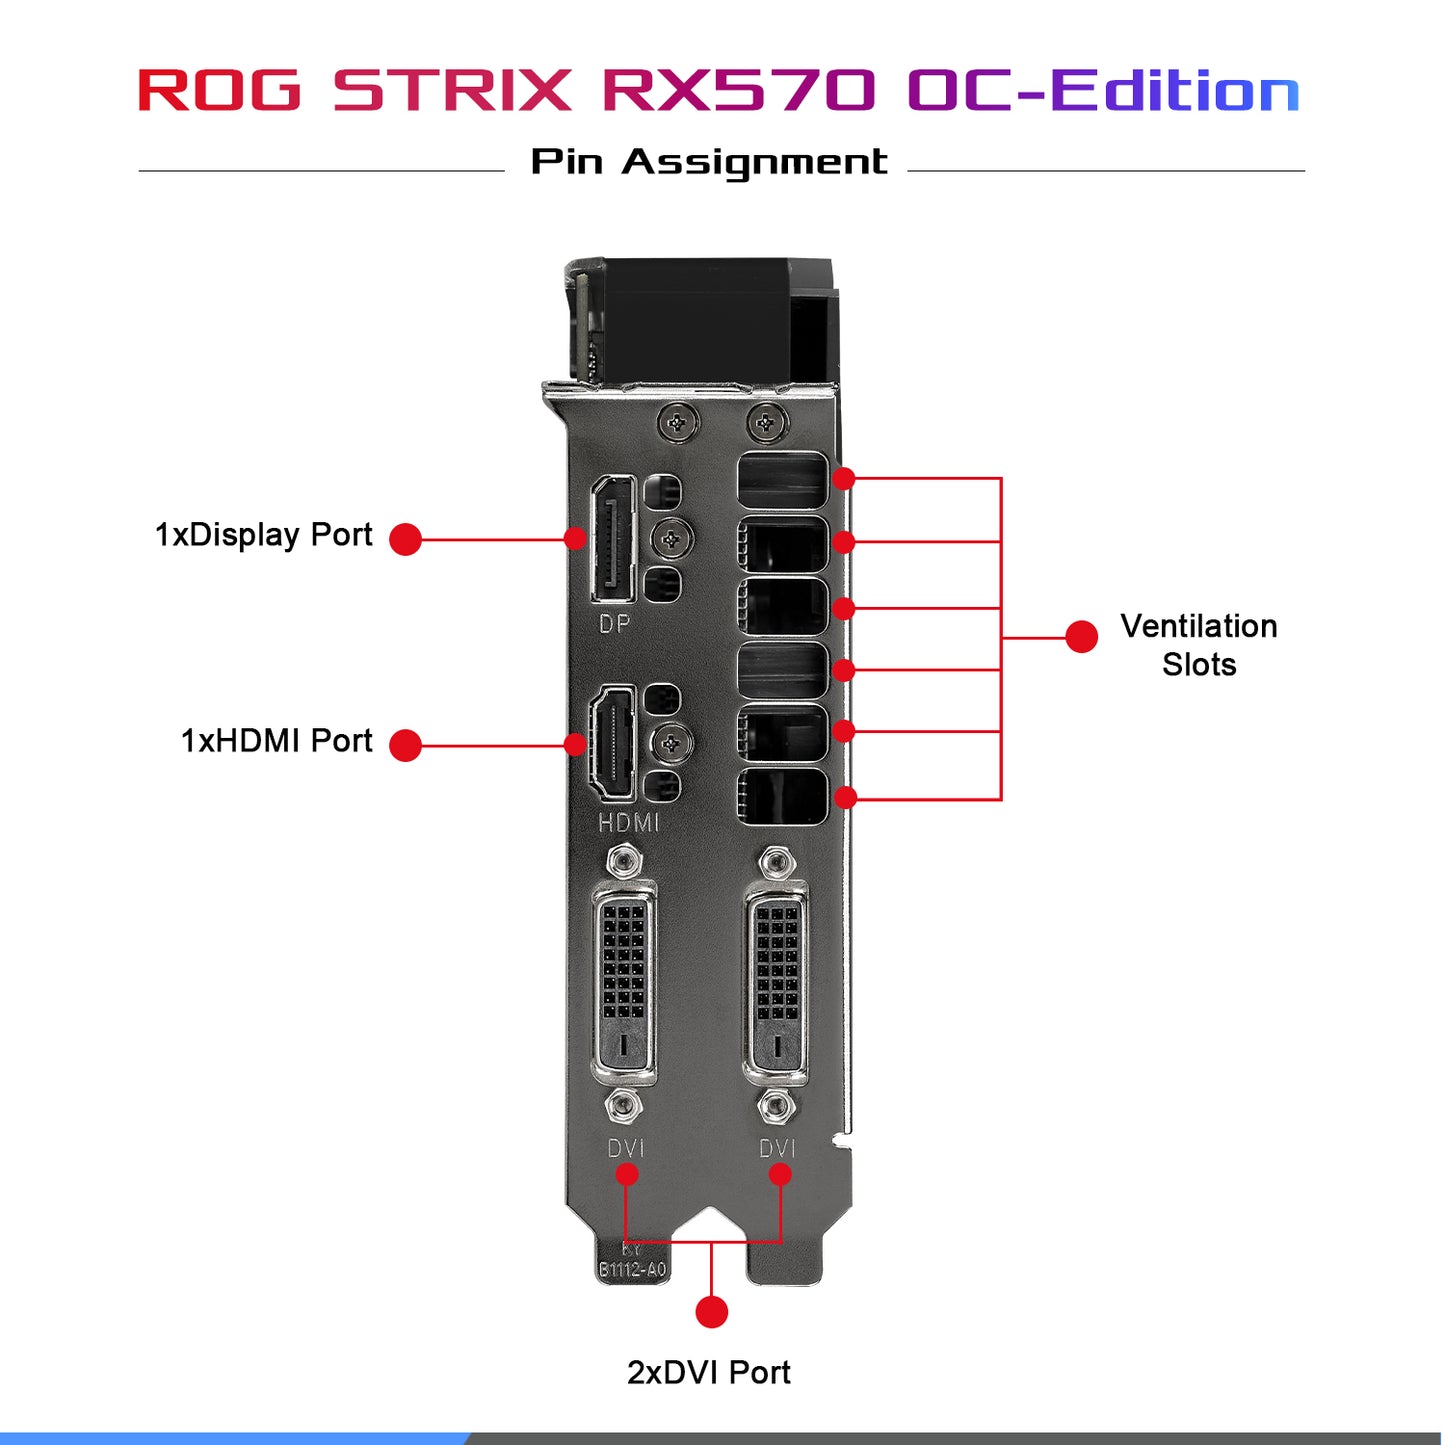 ASUS ROG Strix RX570 O8G DDR5 8GB 256-बिट गेमिंग ग्राफ़िक्स कार्ड